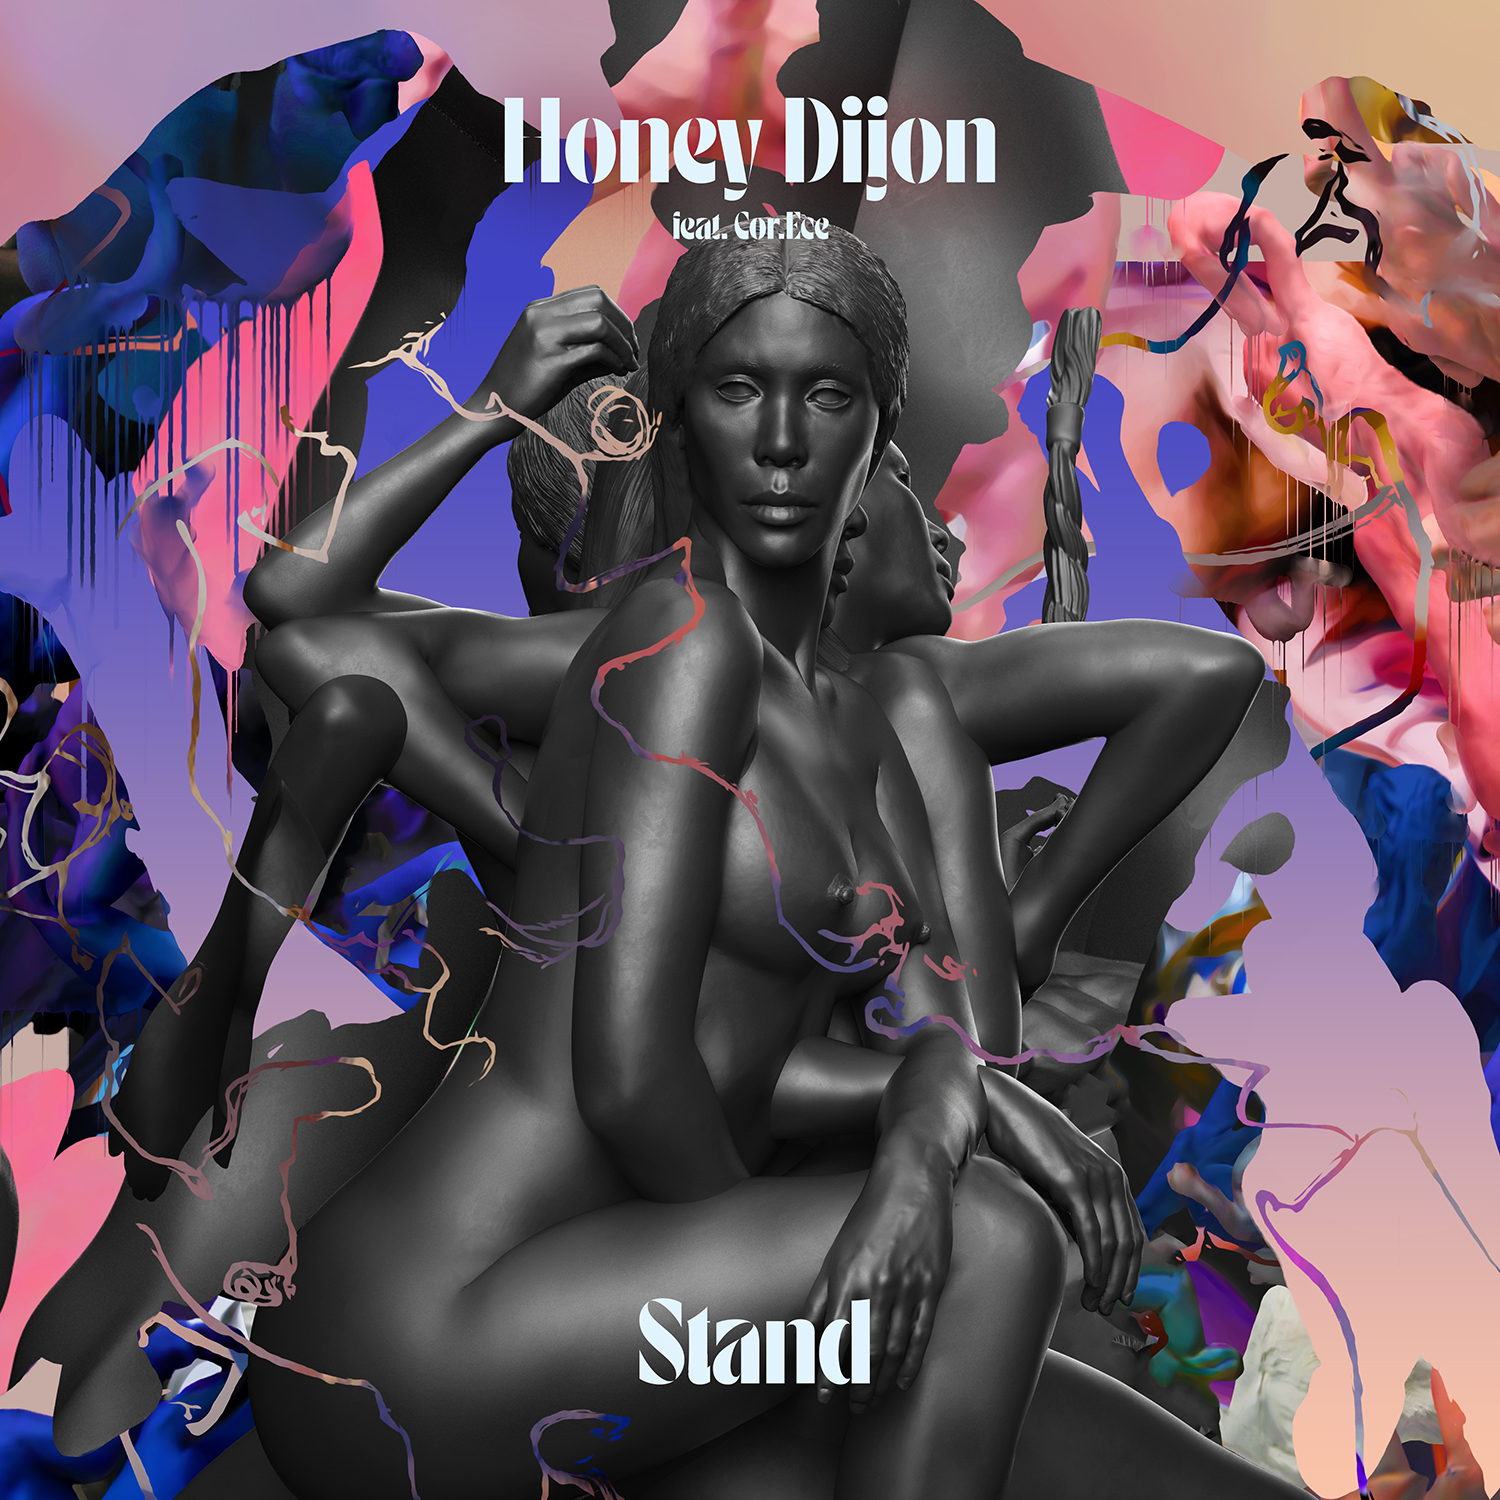 Honey Dijon featuring Cor.Ece “Stand”